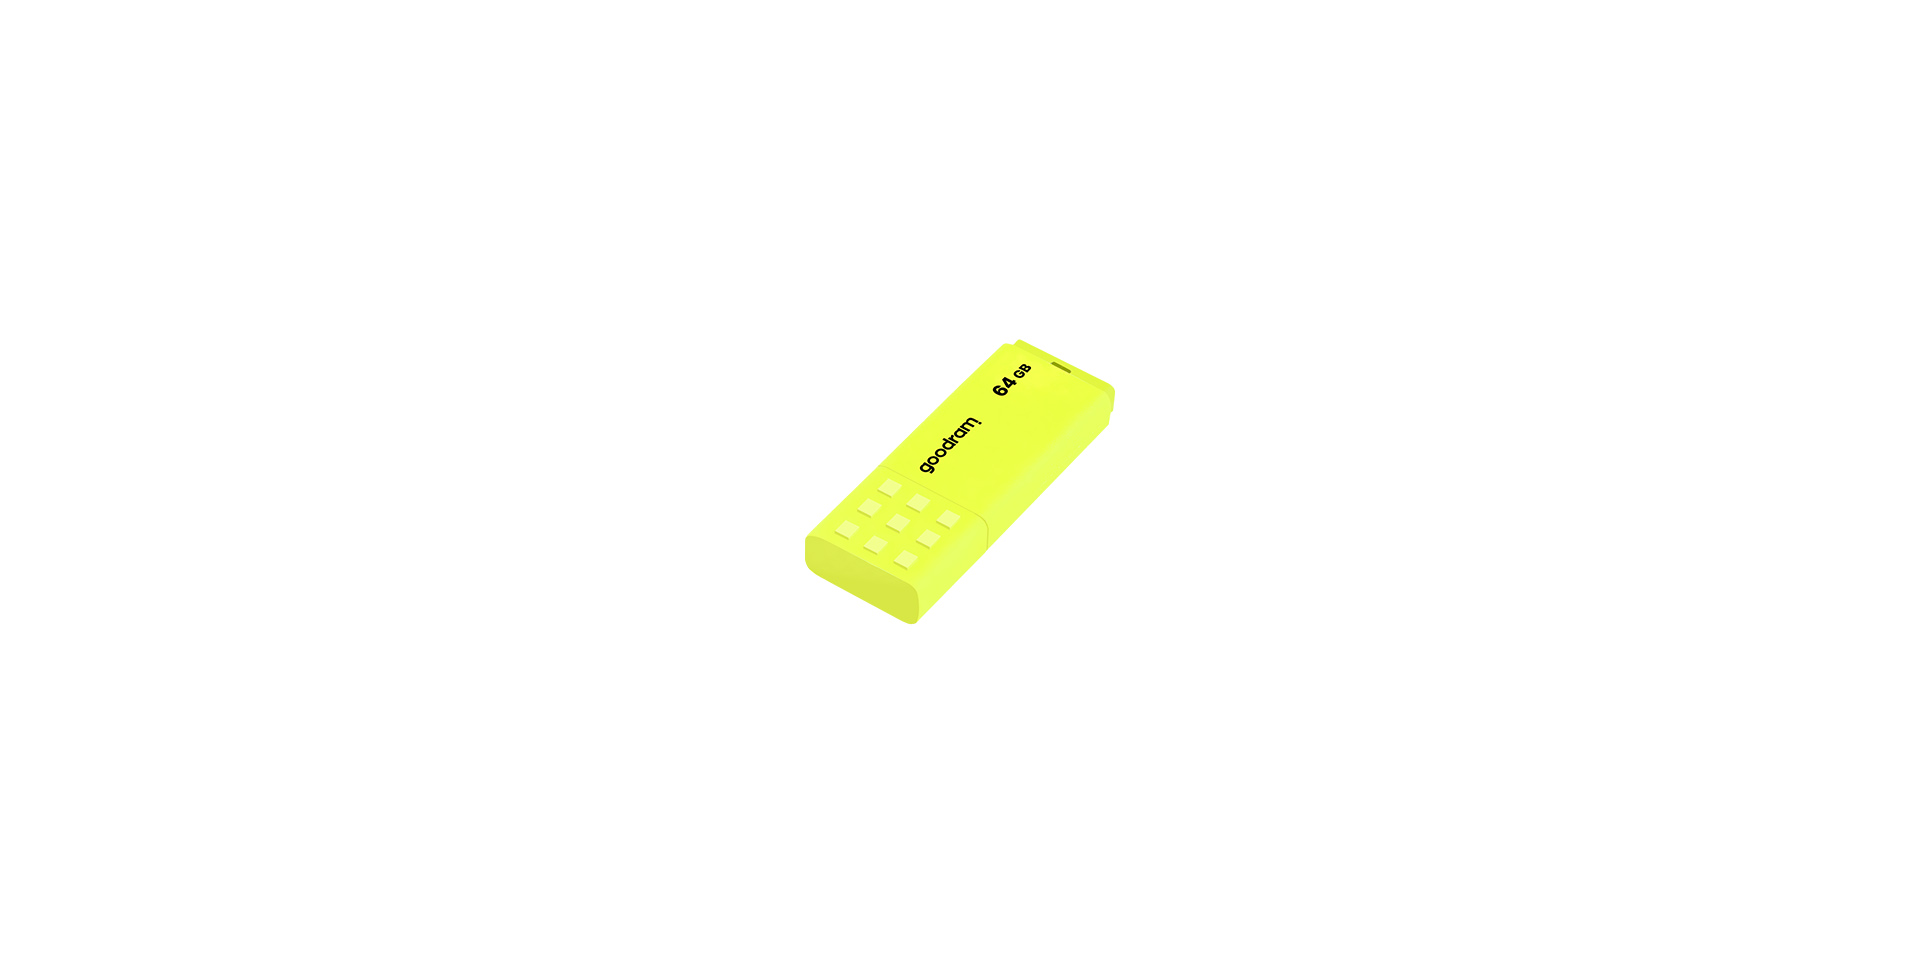 8GB USB 2.0 Yellow - UME2